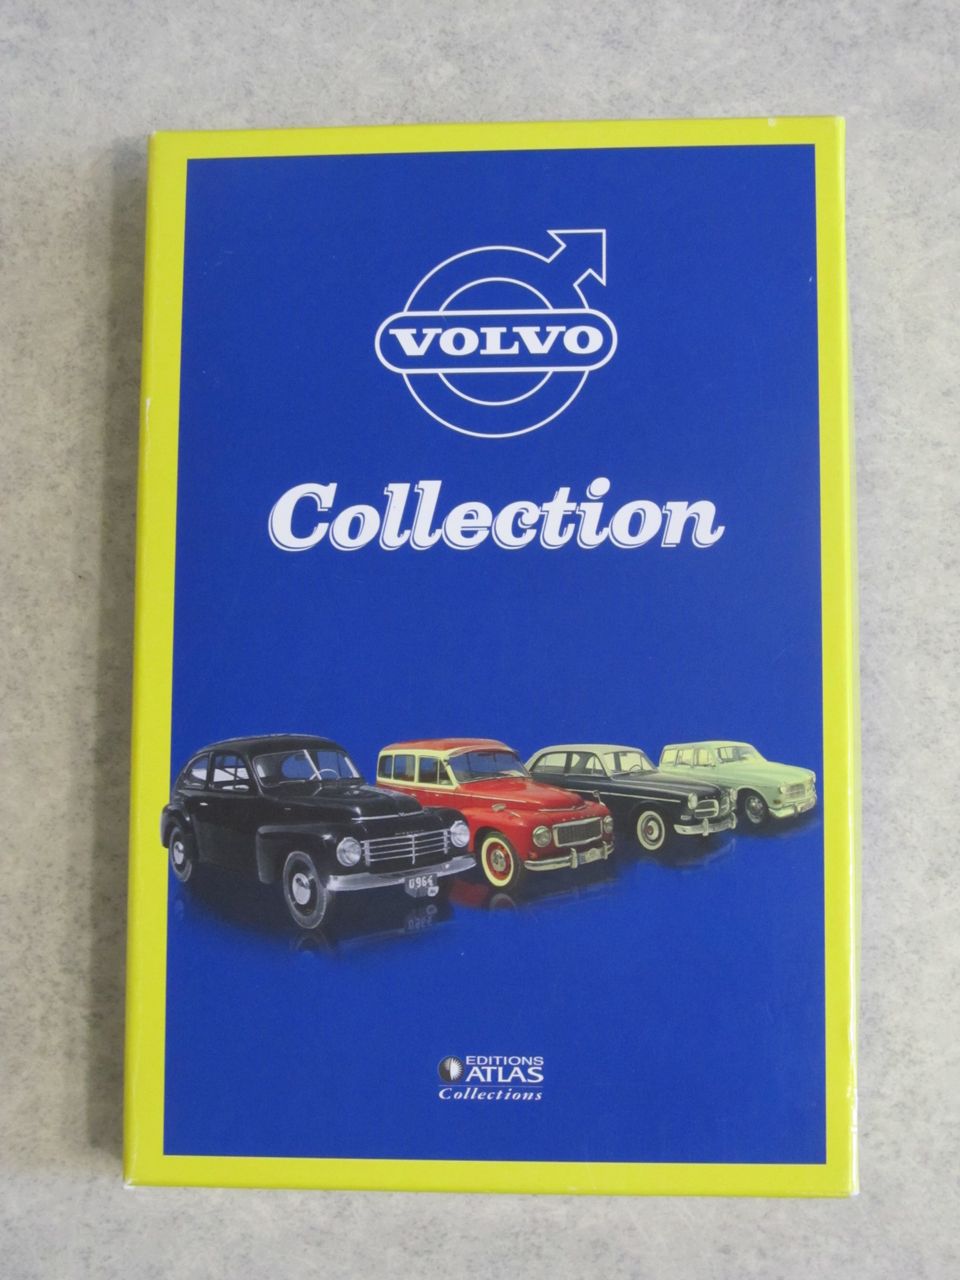 Editions Atlas: Volvo Collection